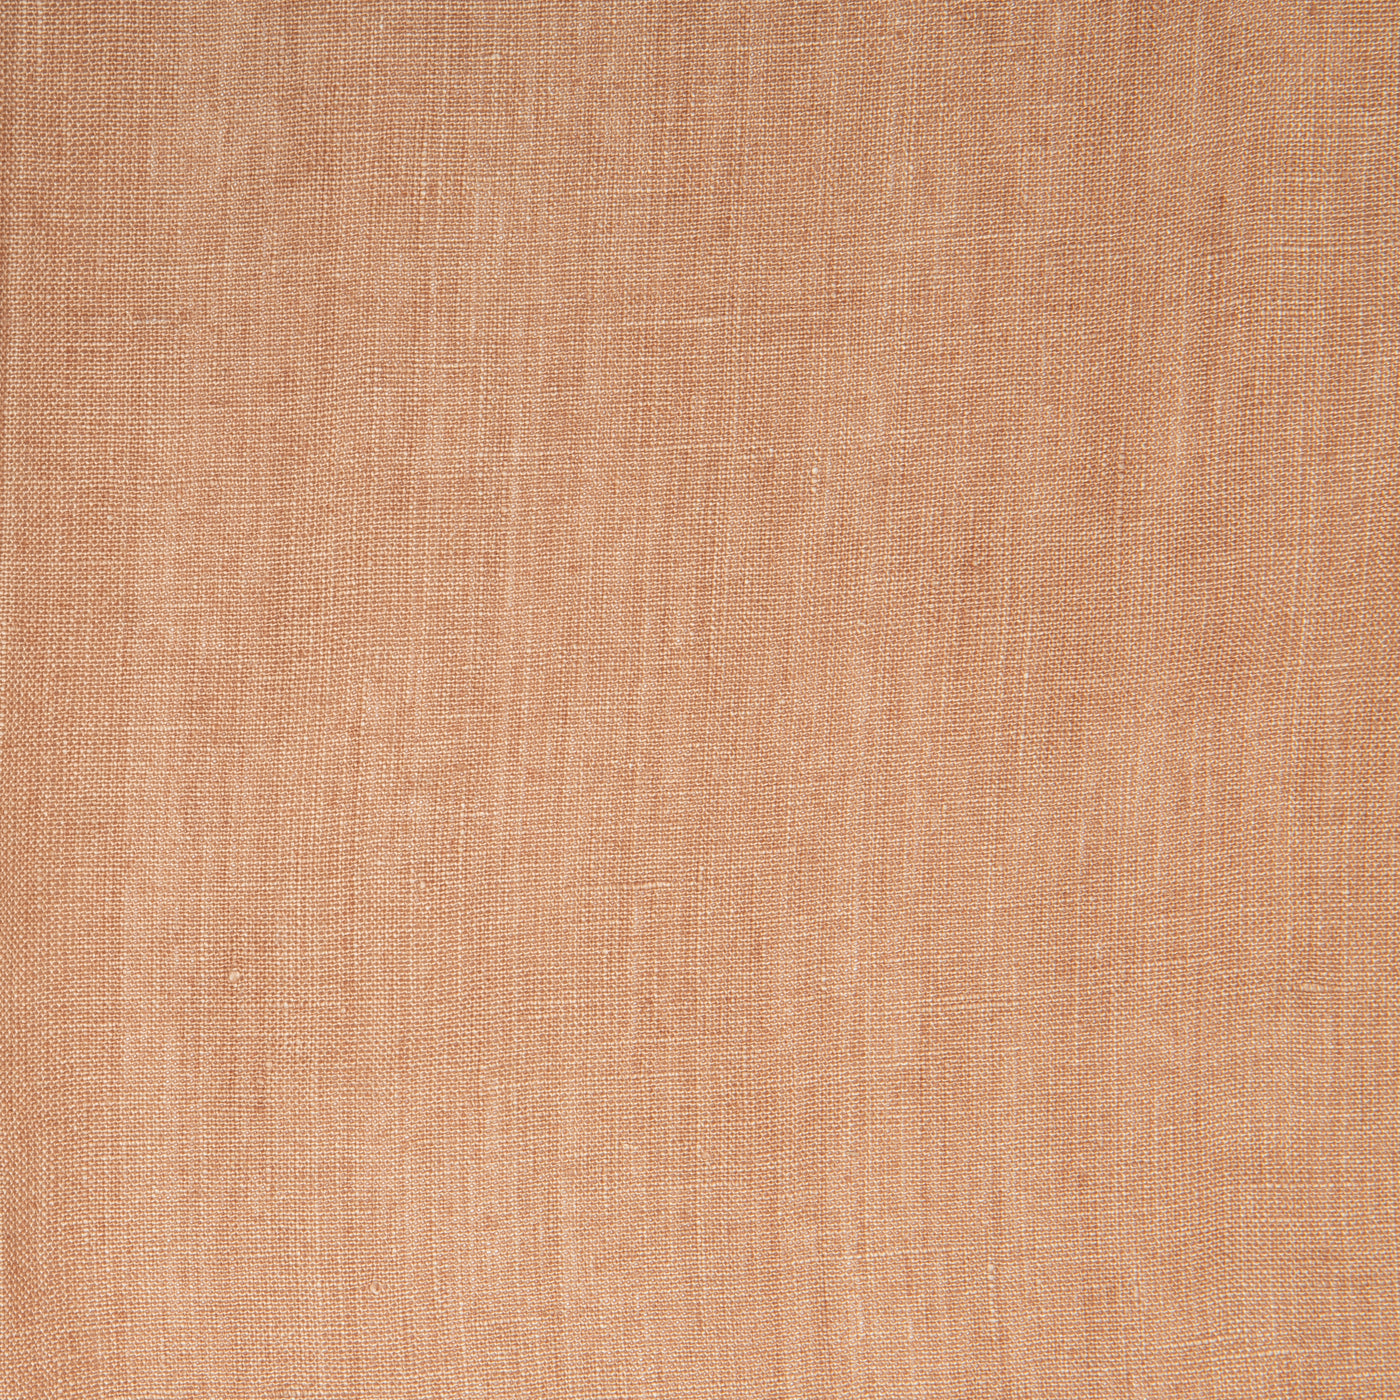 Palma Handwoven Linen Nude Peach Napkins 20x20 - Set of 4